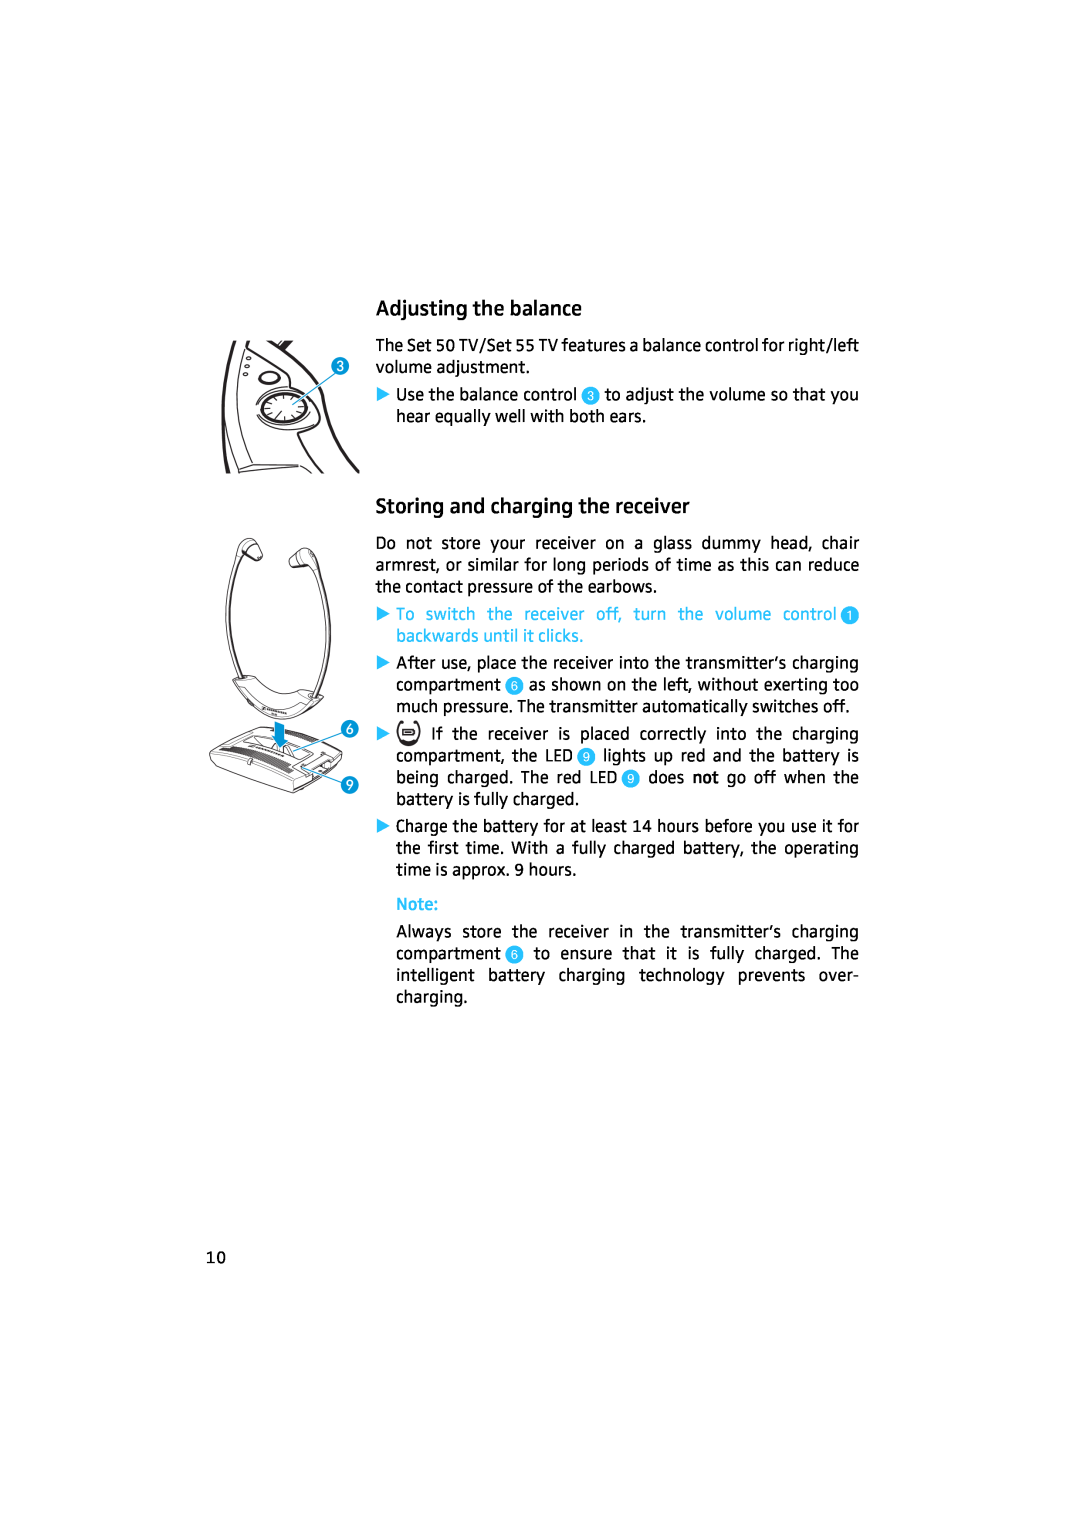 Sennheiser 50 manual Adjusting the balance, Storing and charging the receiver 